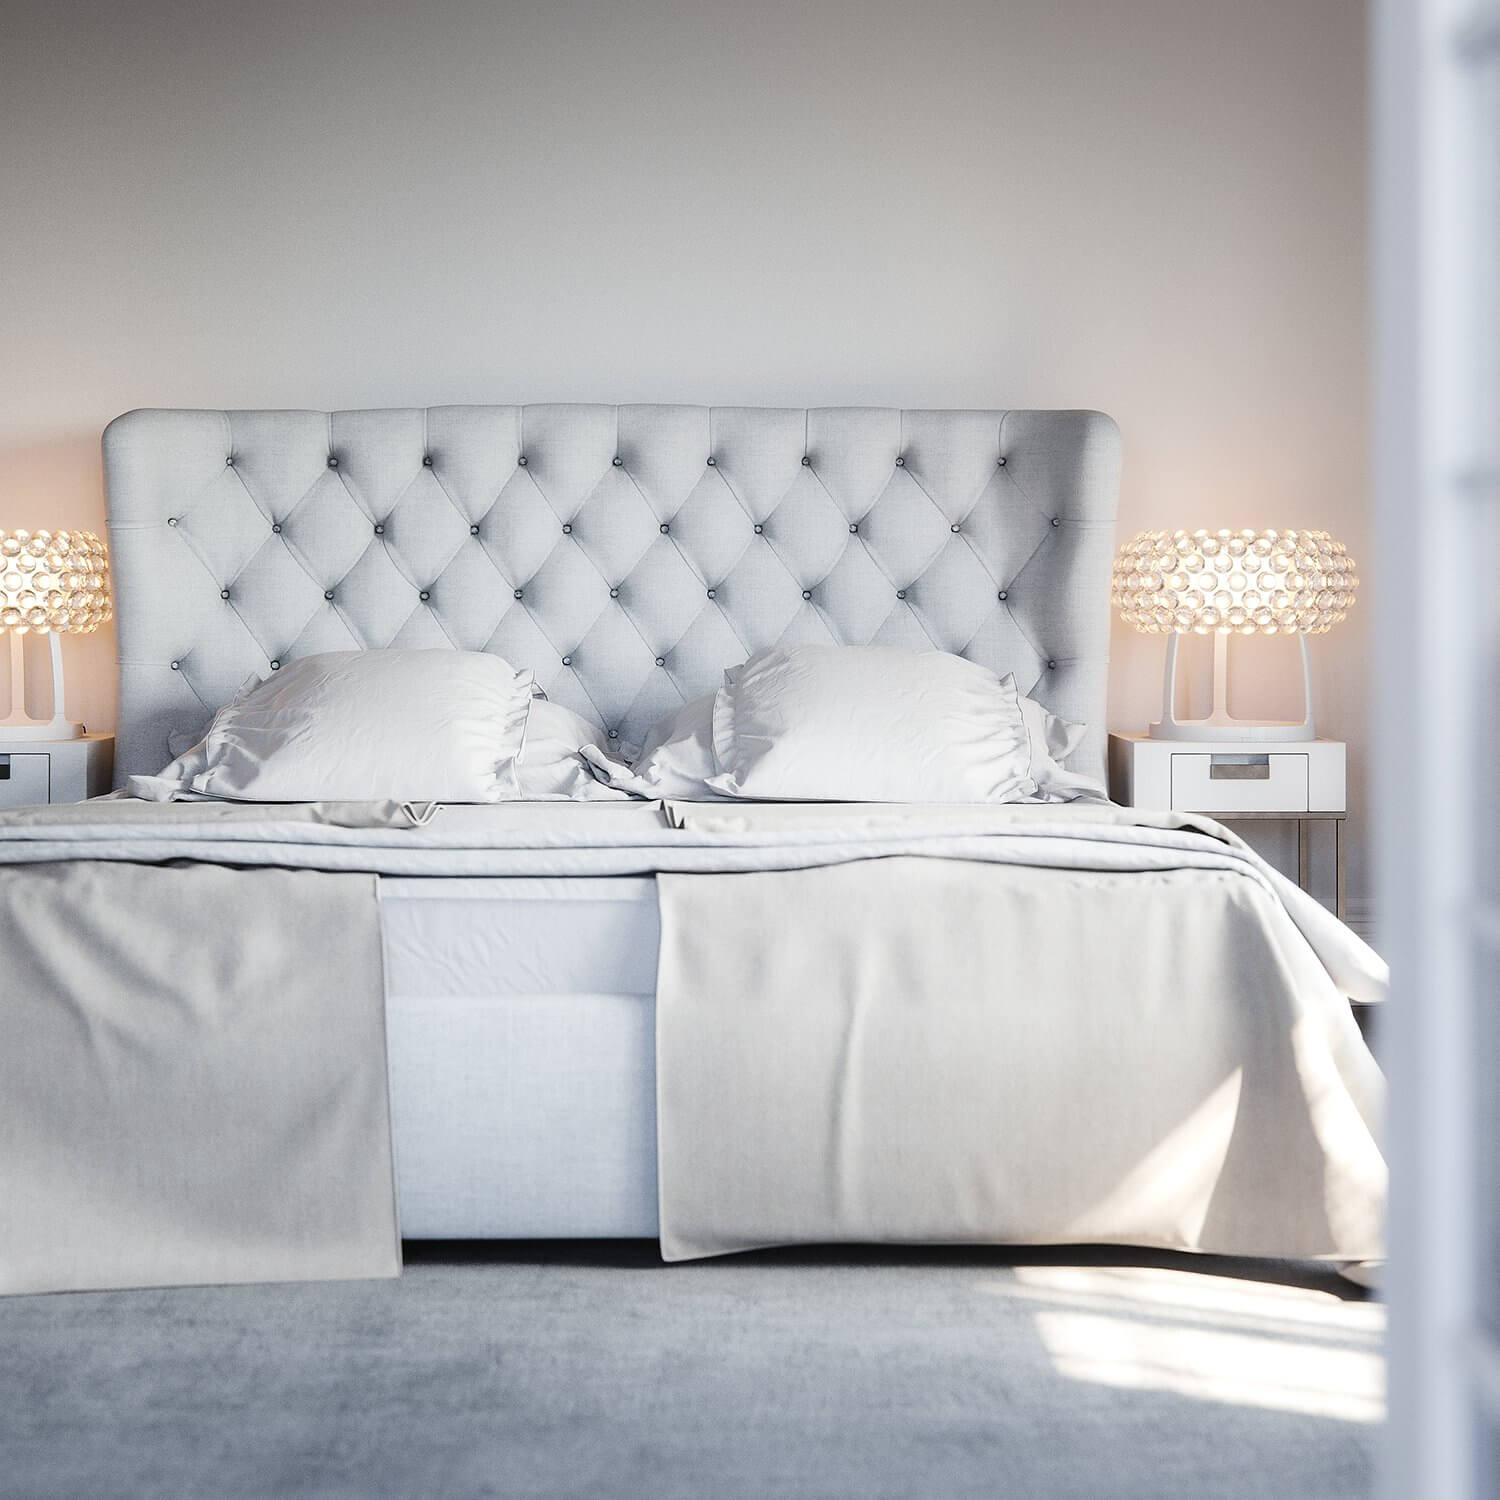 Classic flat bedroom fabric bedhead - cgi visualization